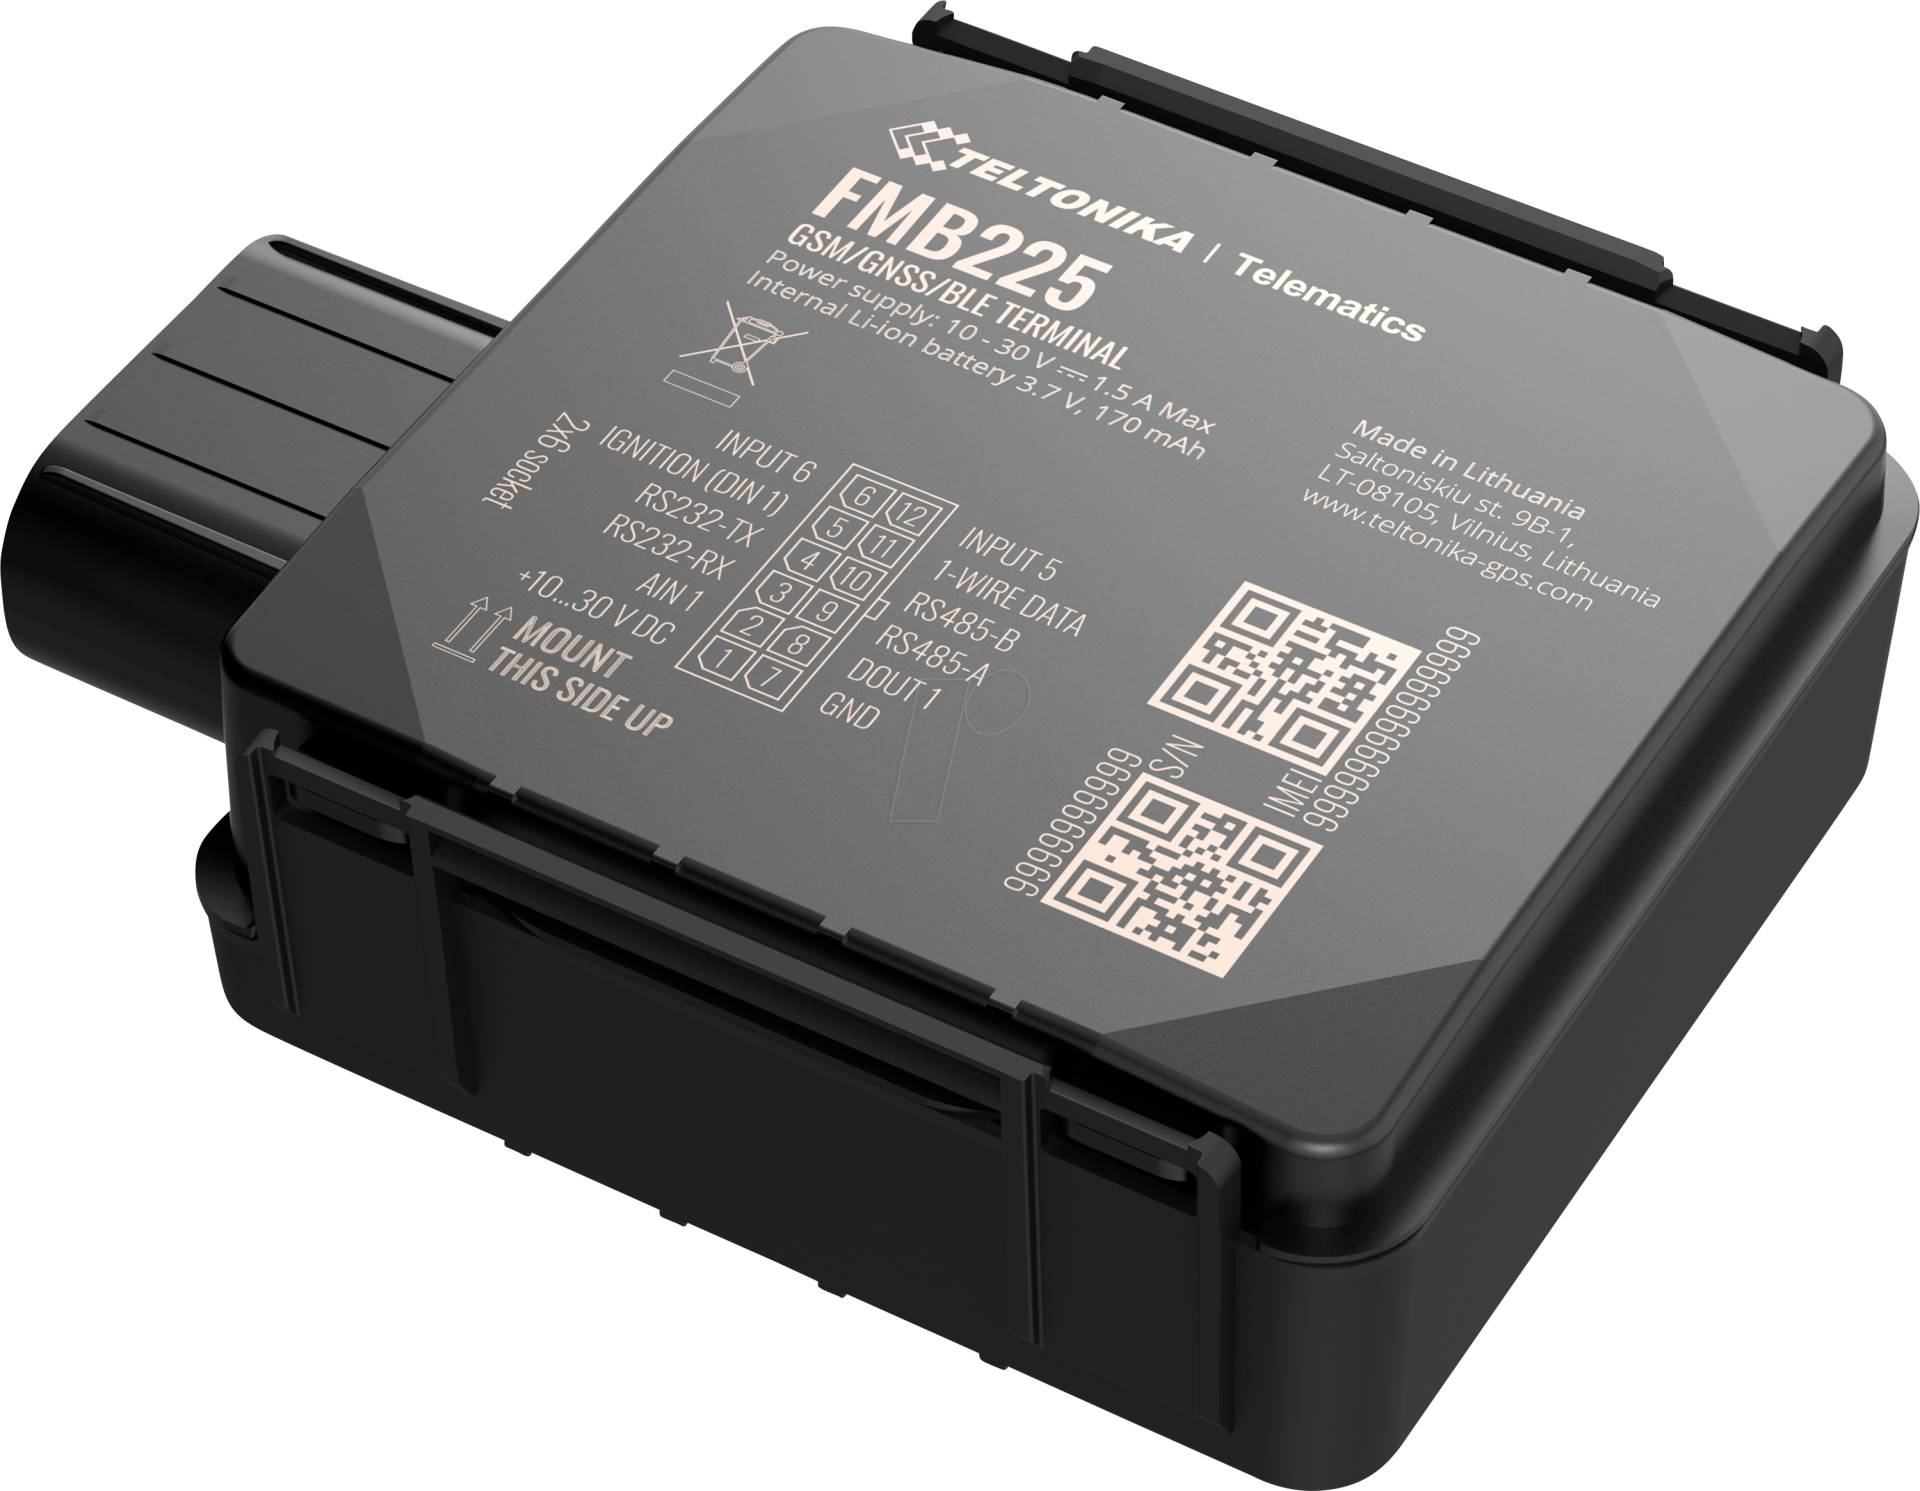 TELTONIKA FMB225 - Terminal-Tracker, GNSS, GSM, Bluetooth, RS232 , RS485, Batterie von TELTONIKA